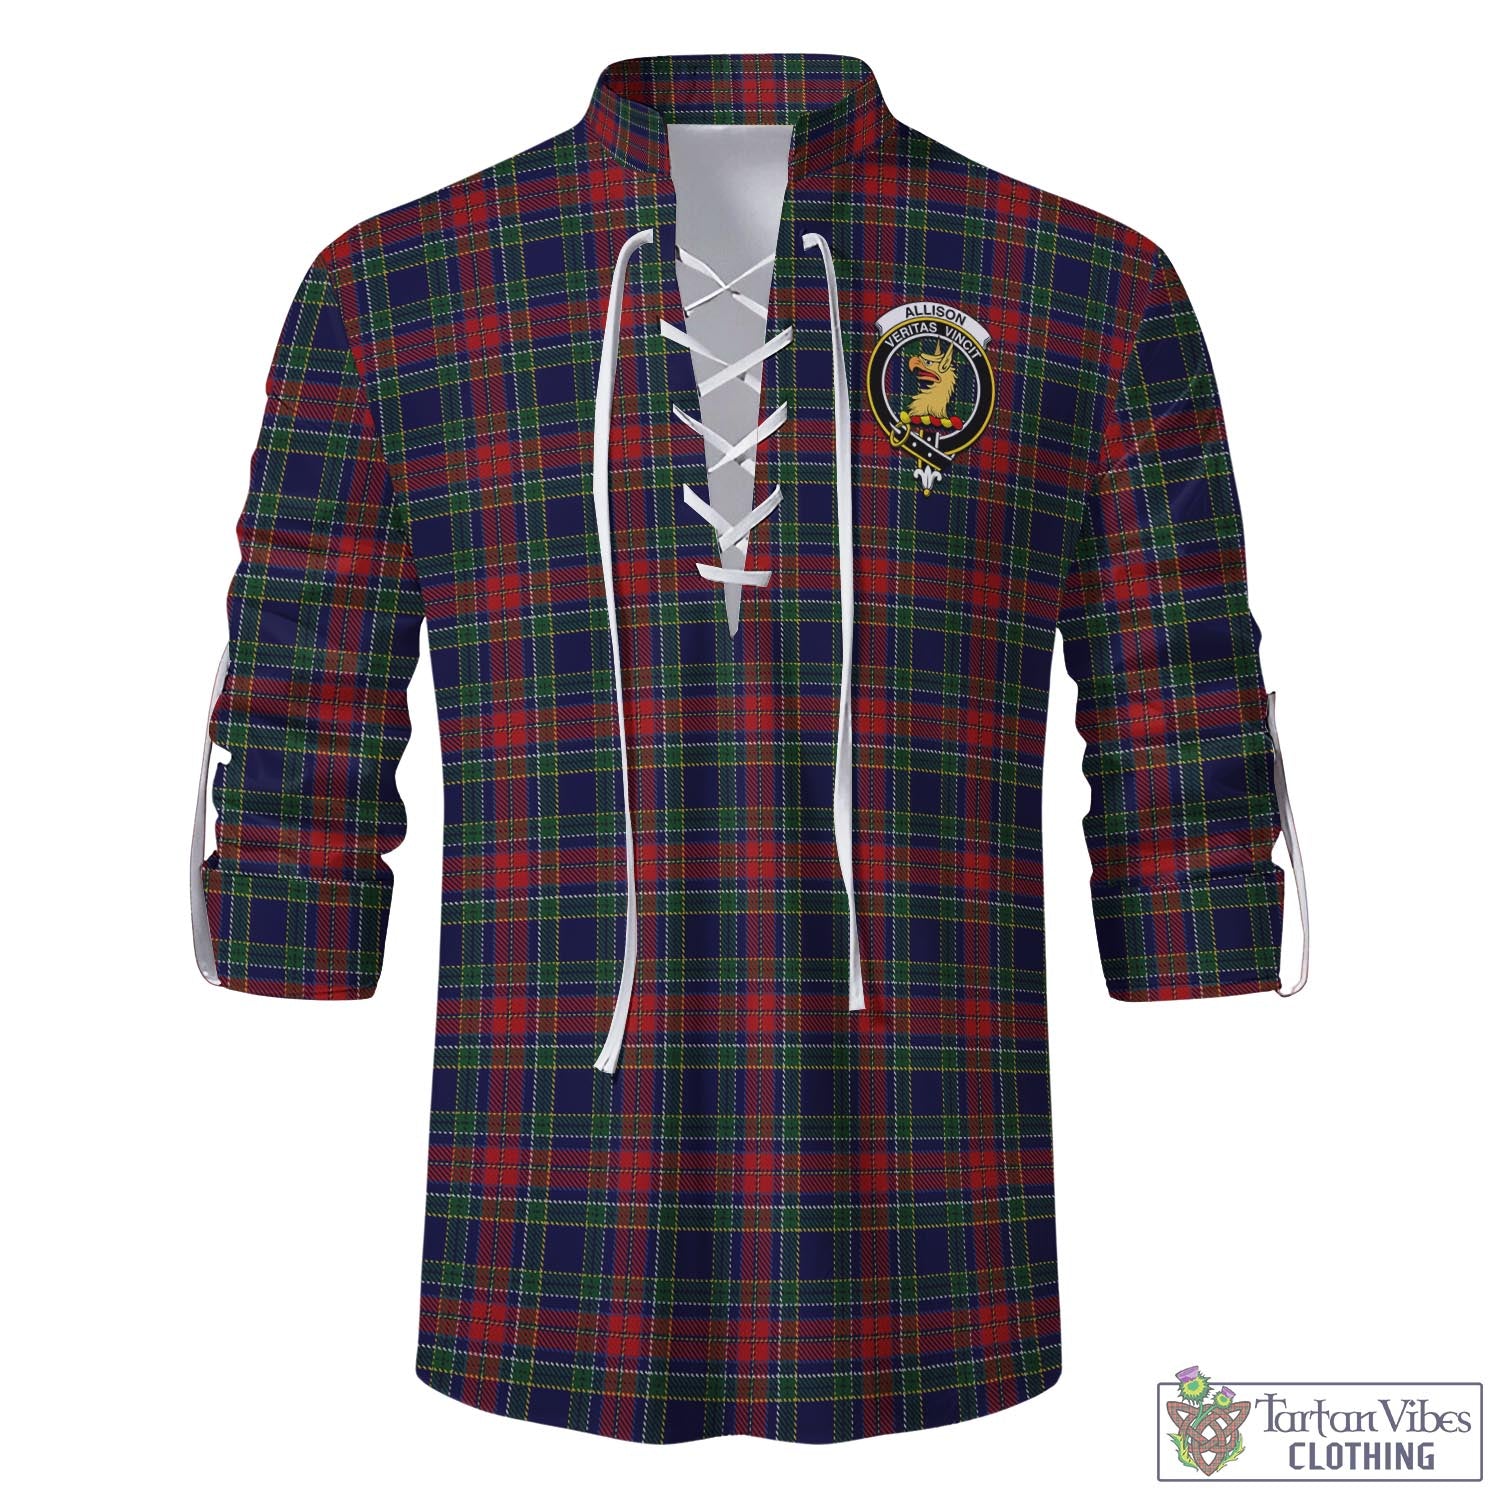 Tartan Vibes Clothing Allison Red Tartan Men's Scottish Traditional Jacobite Ghillie Kilt Shirt with Family Crest